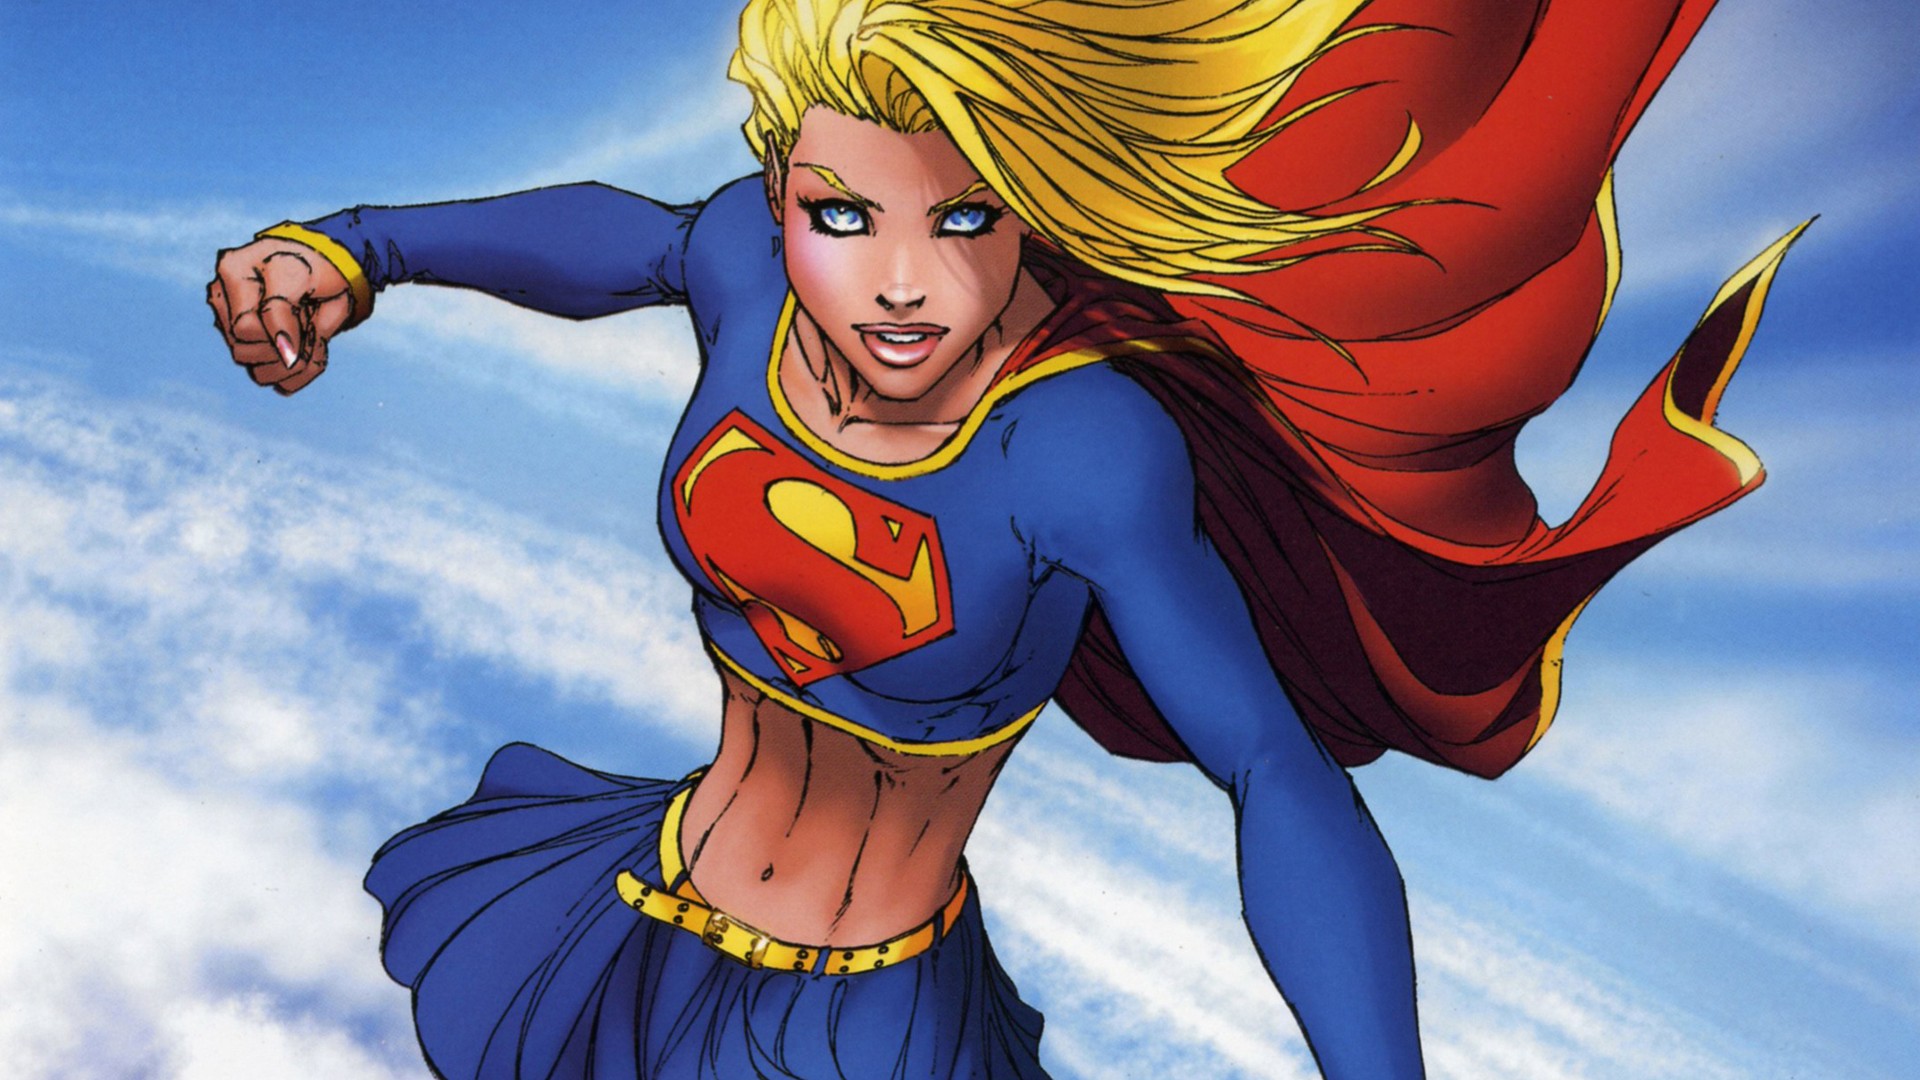 General 1920x1080 Supergirl comics DC Comics illustration Michael Turner superheroines fist women blonde blue eyes costumes belly skirt cape abs